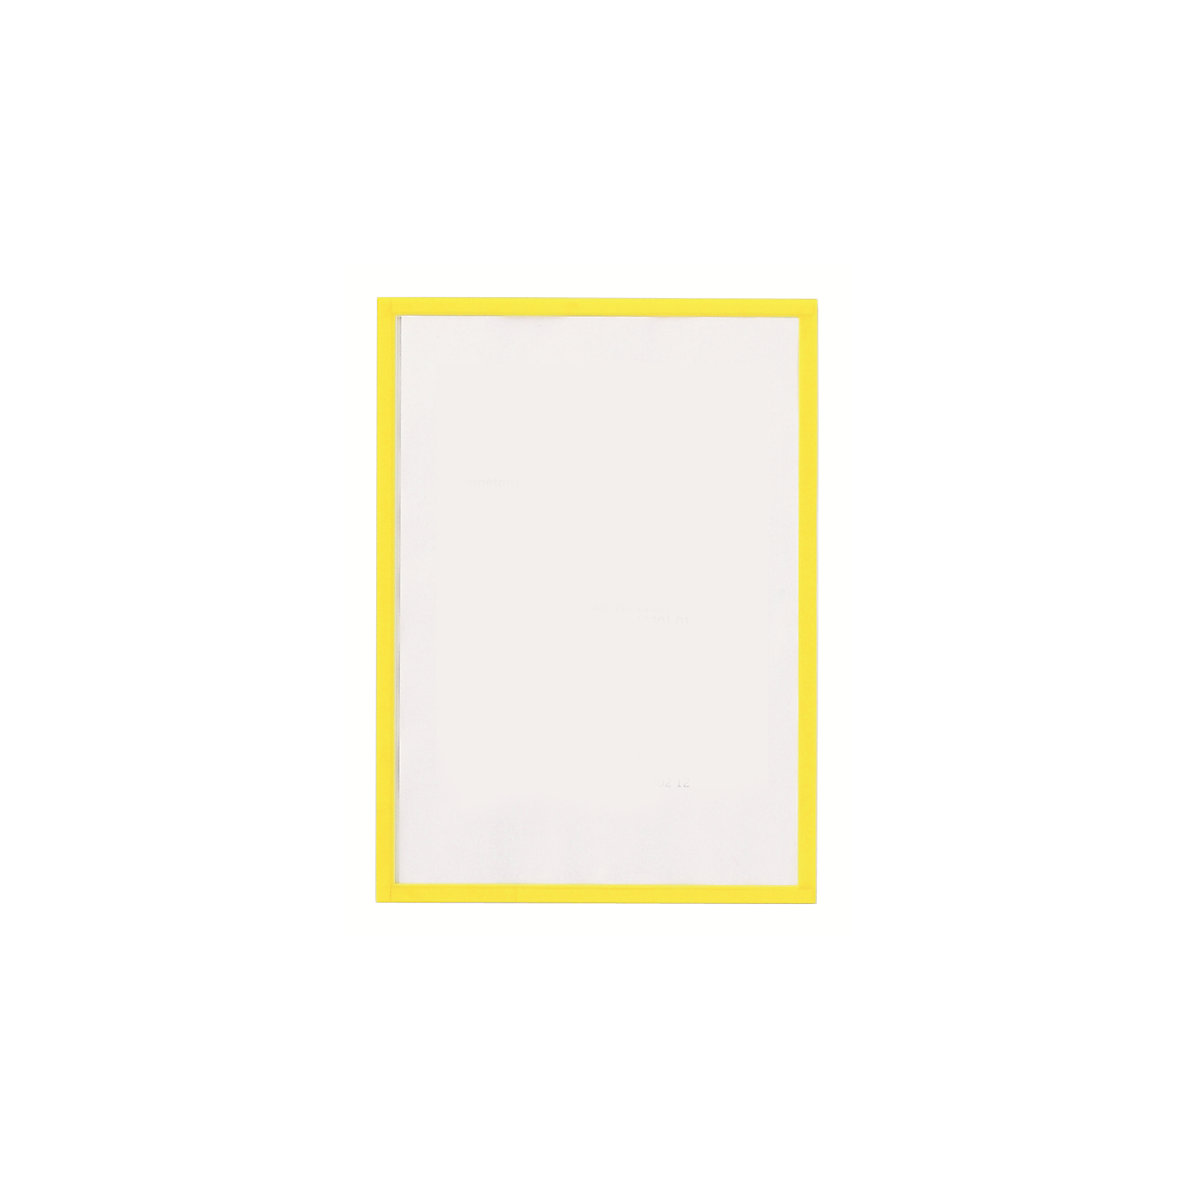 Pochettes magnetofix – magnetoplan, format A3, lot de 5, cadre jaune